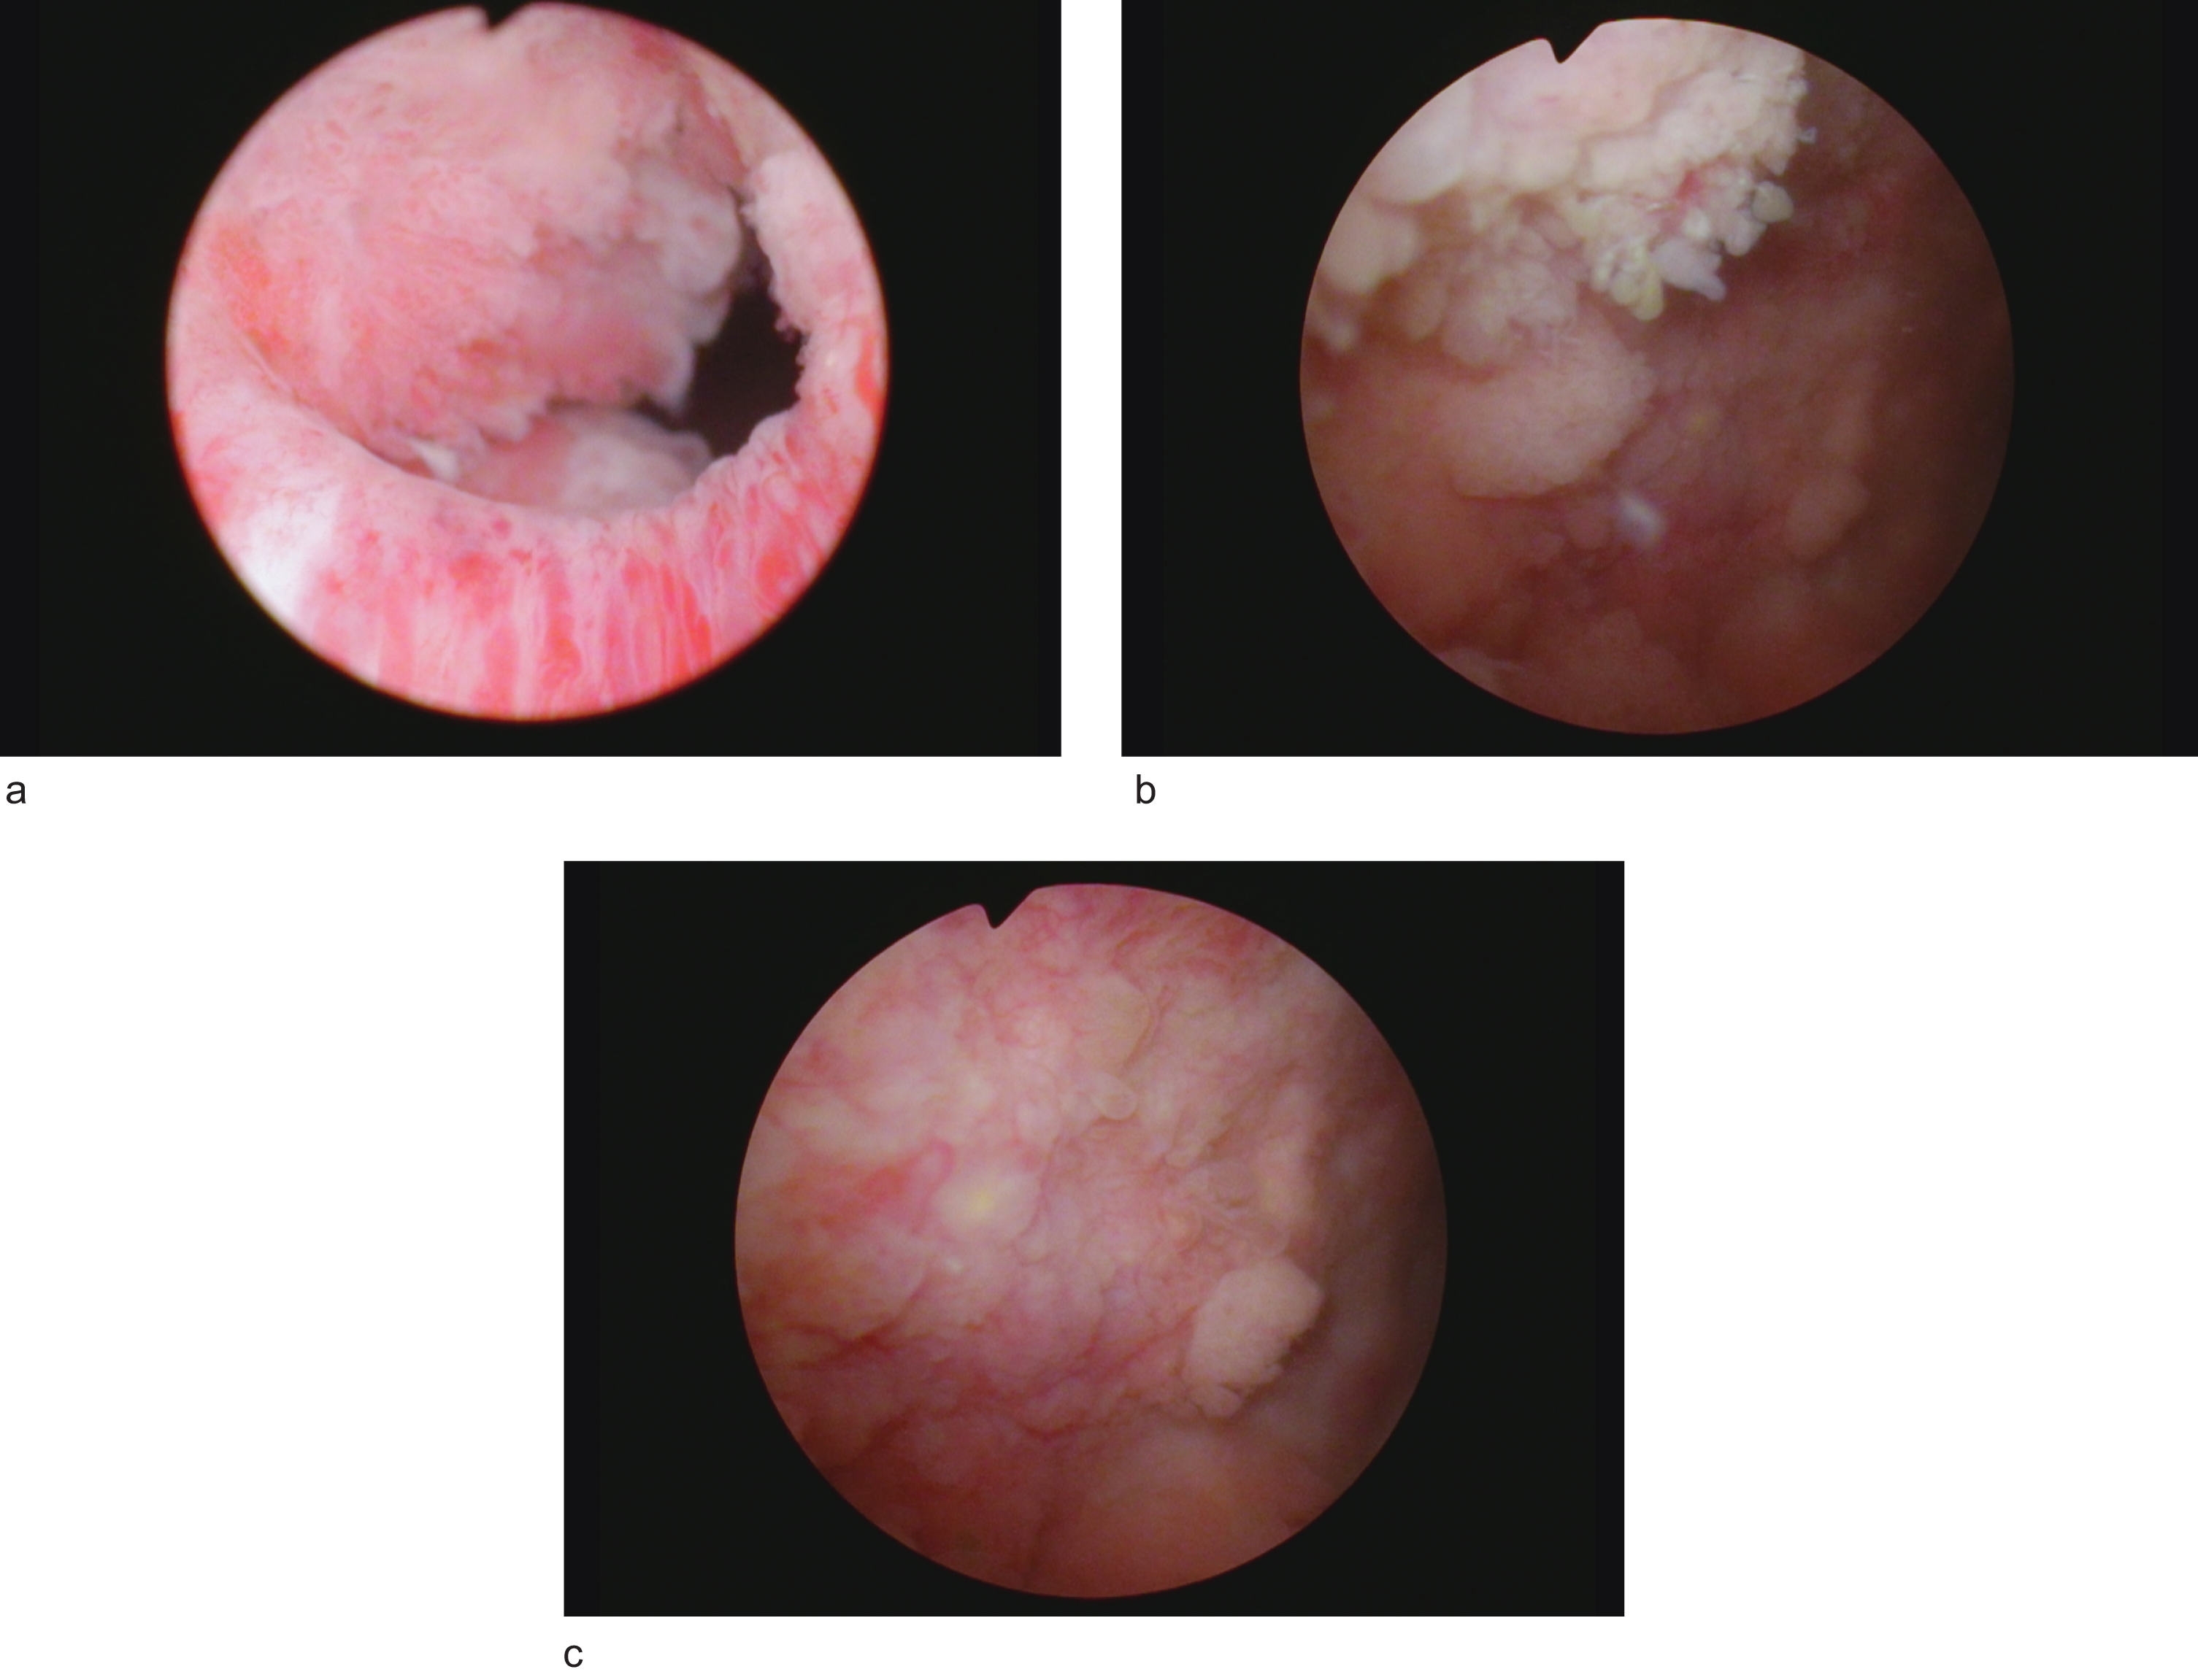 a. Papillary tumor right bladder neck. b,c. Multifocal papillary bladder tumors right lateral and posterior wall.